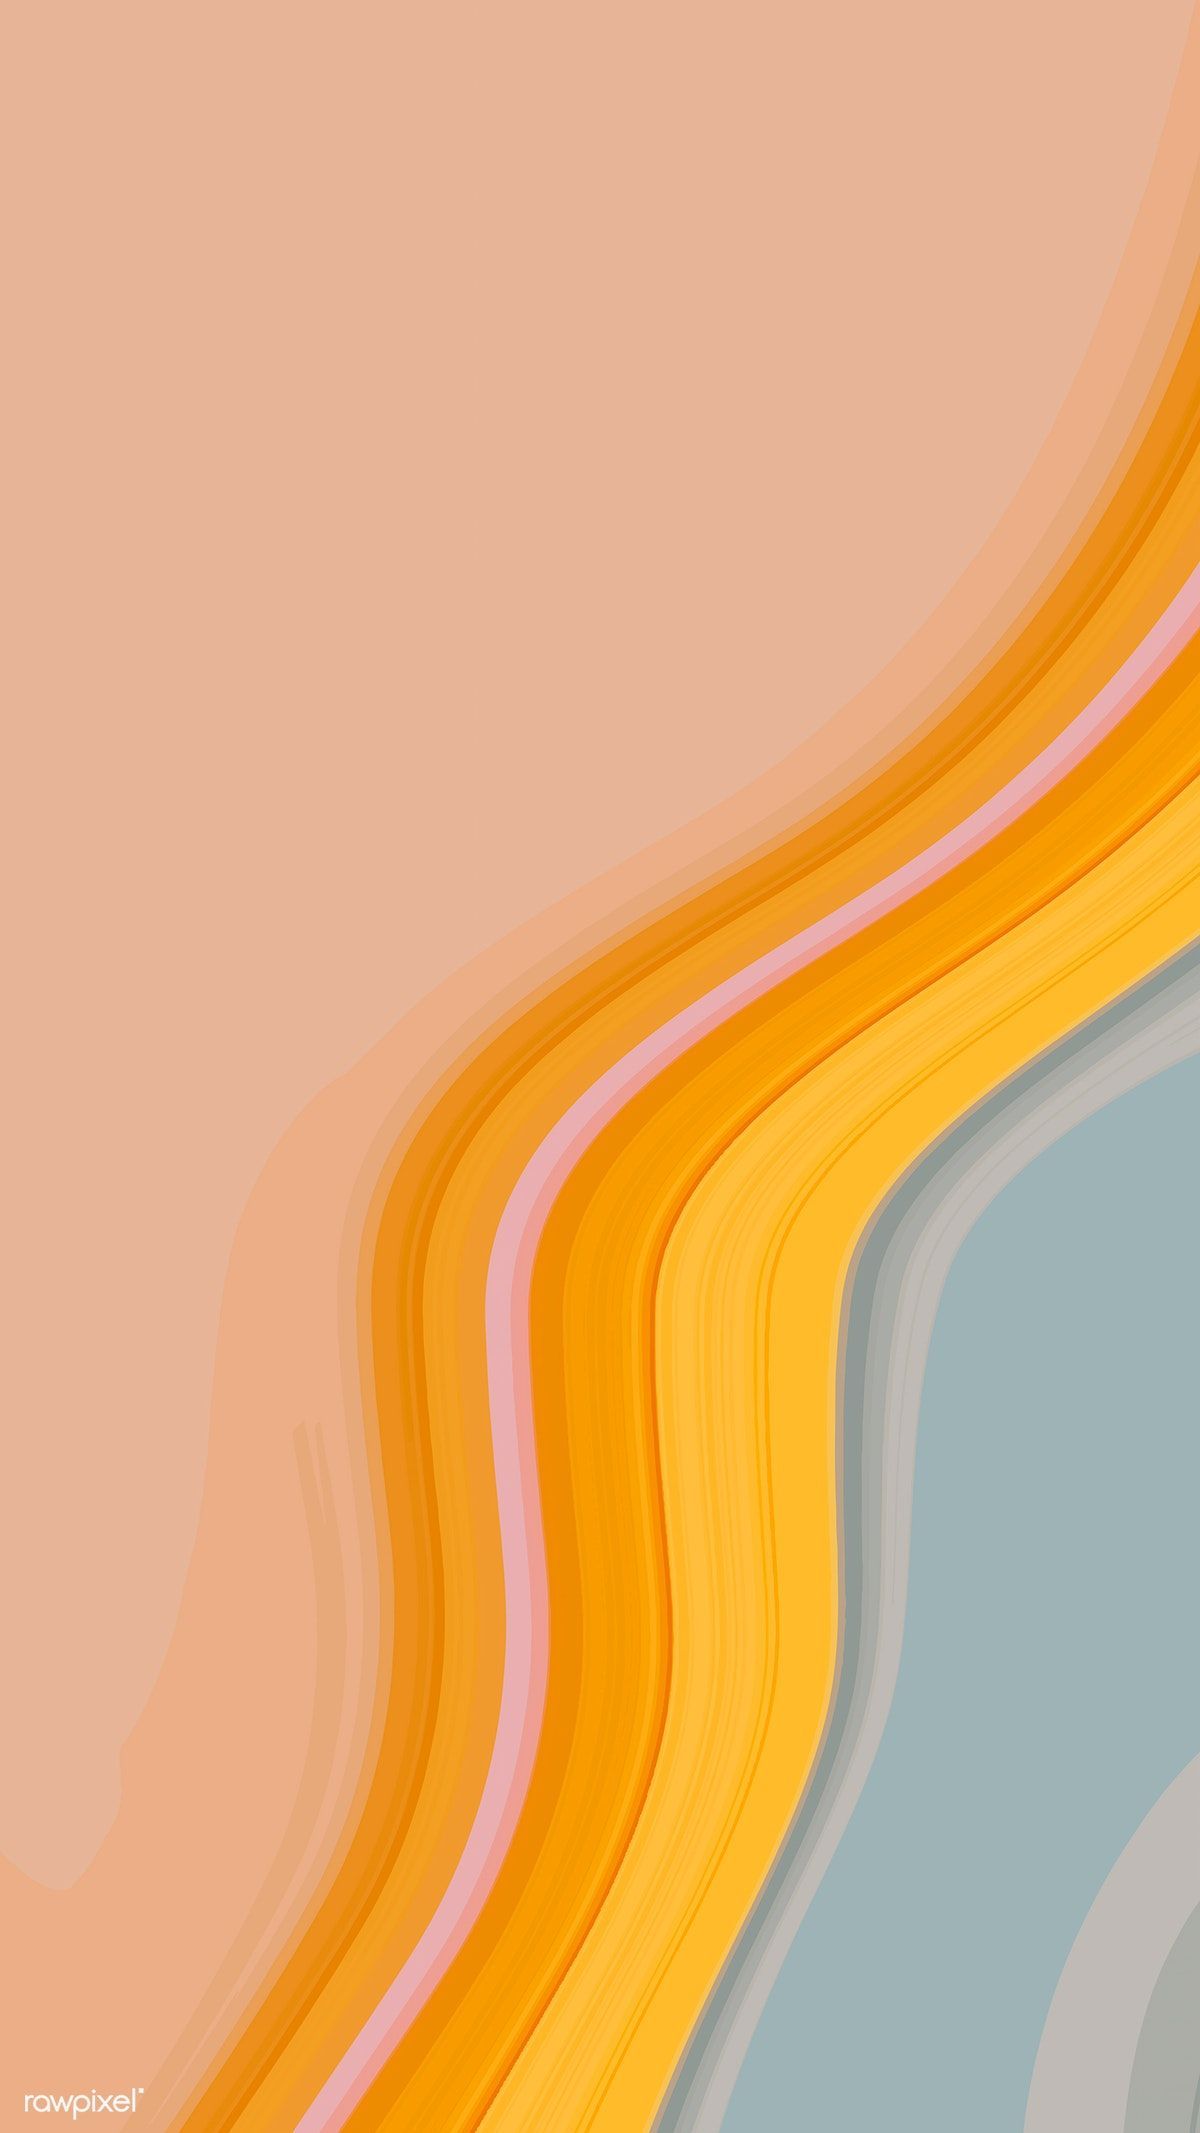 Download premium vector of Orange and blue fluid patterned mobile